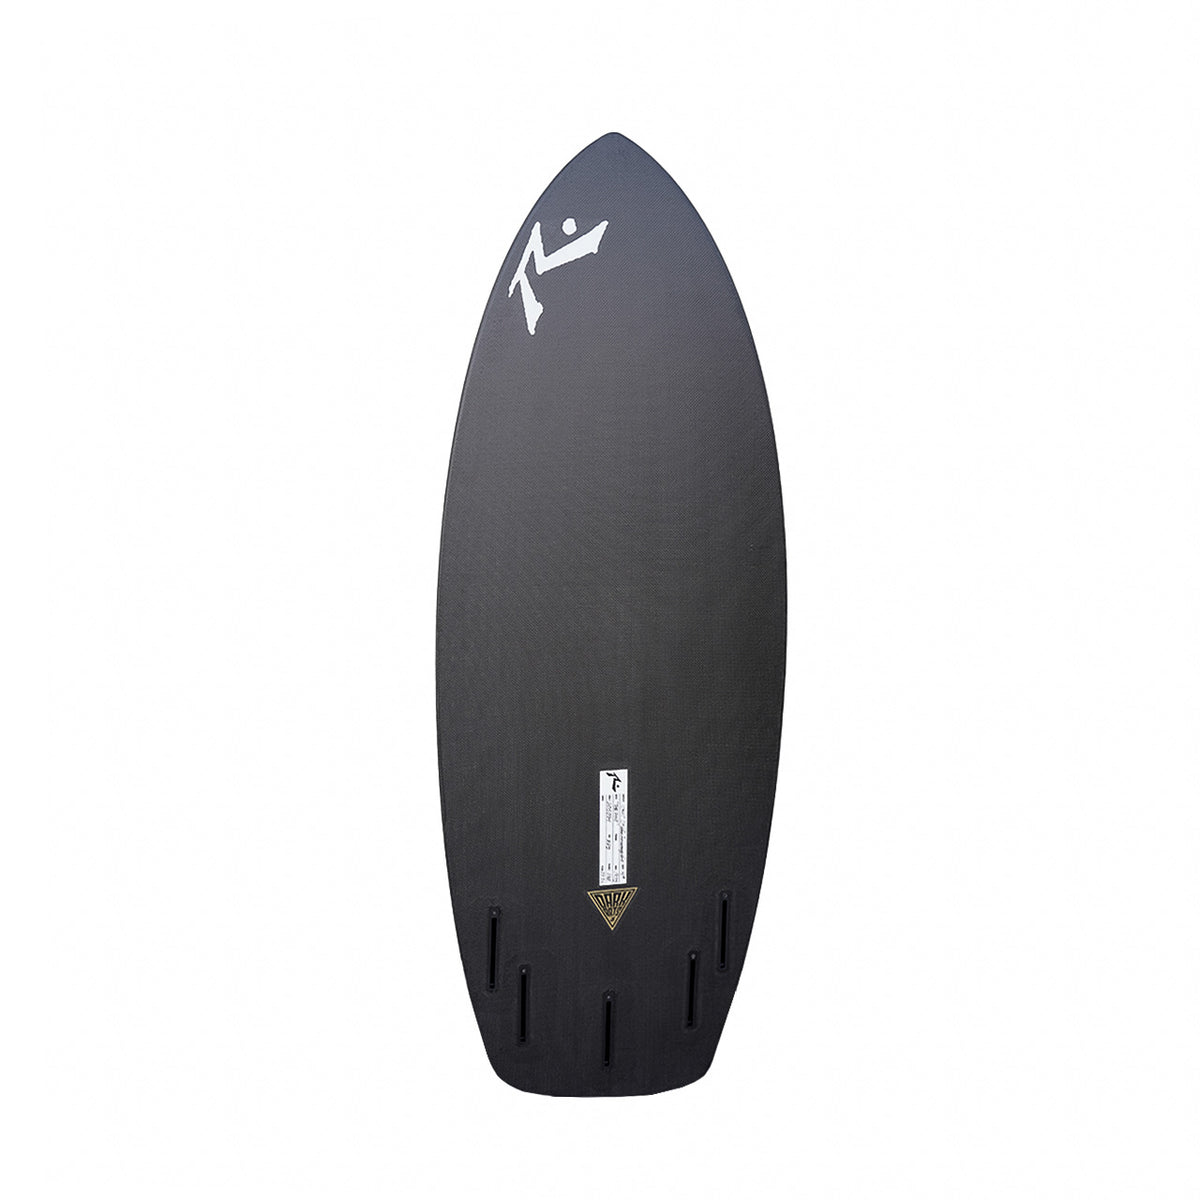 Pint Dark Arts - Carbon Black - Bottom View - Austin Keen Wakesurf board - Rusty Surfboards